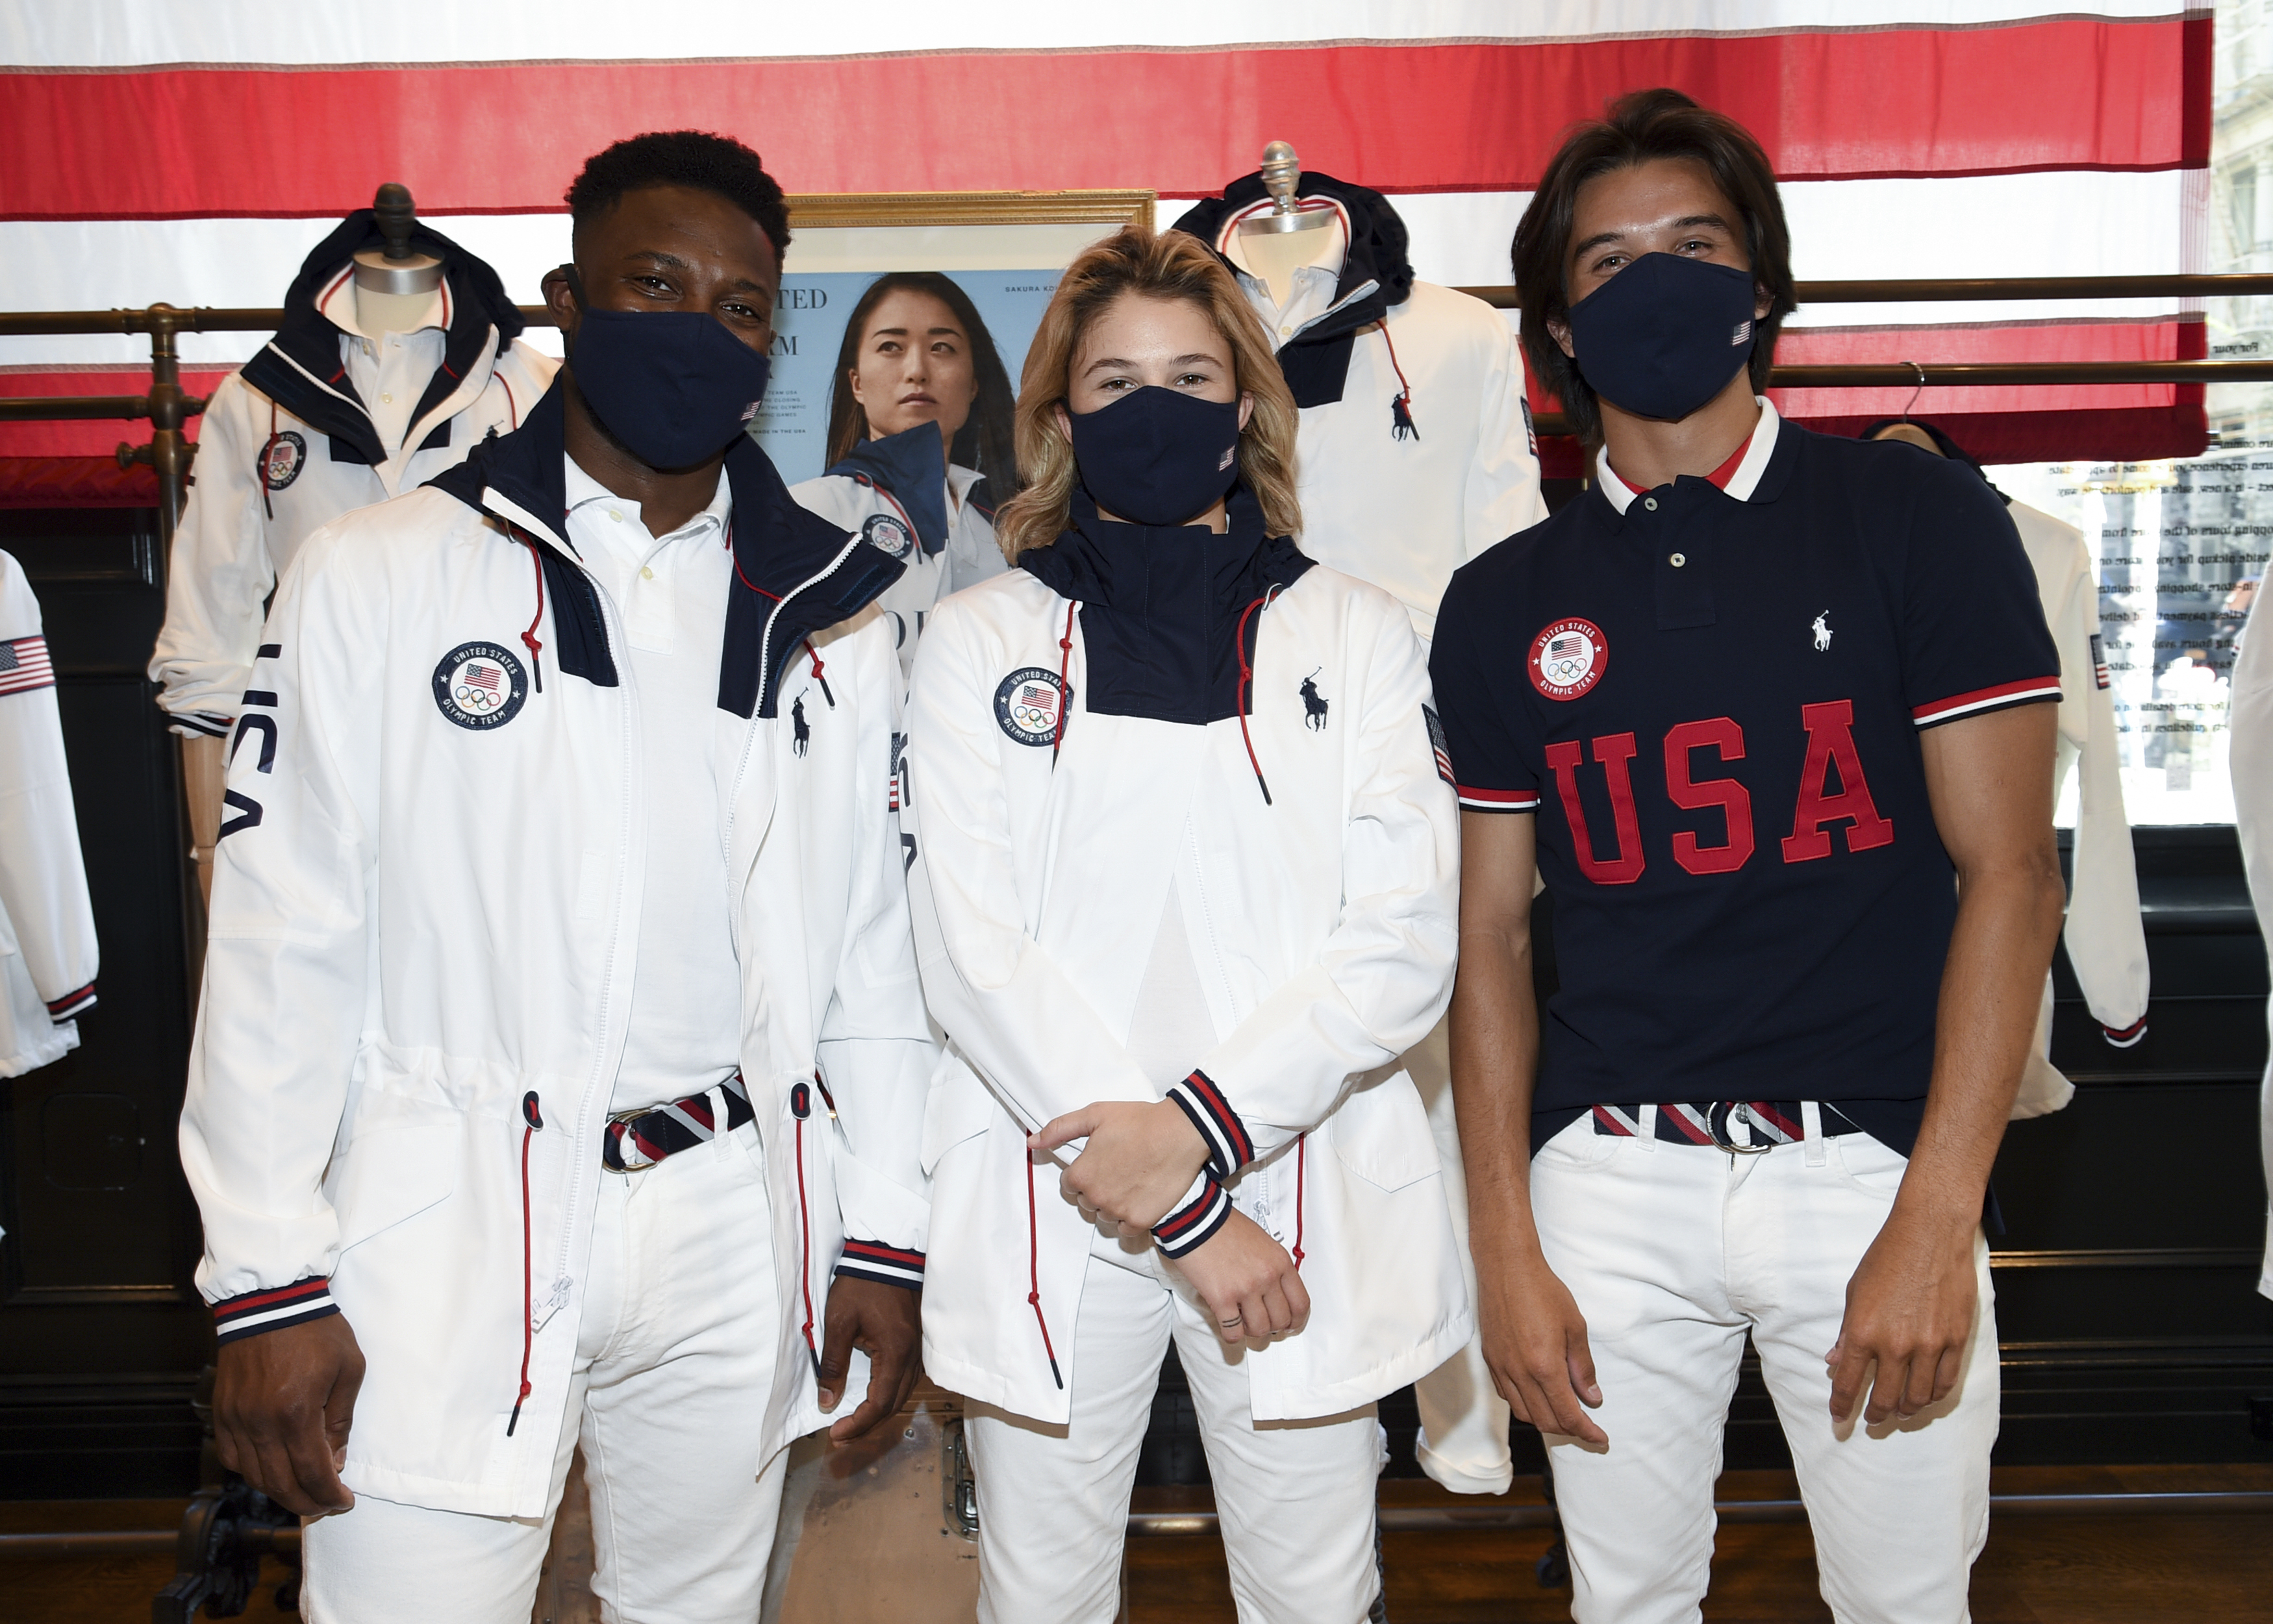 Team USA Olympic Uniforms – June 27